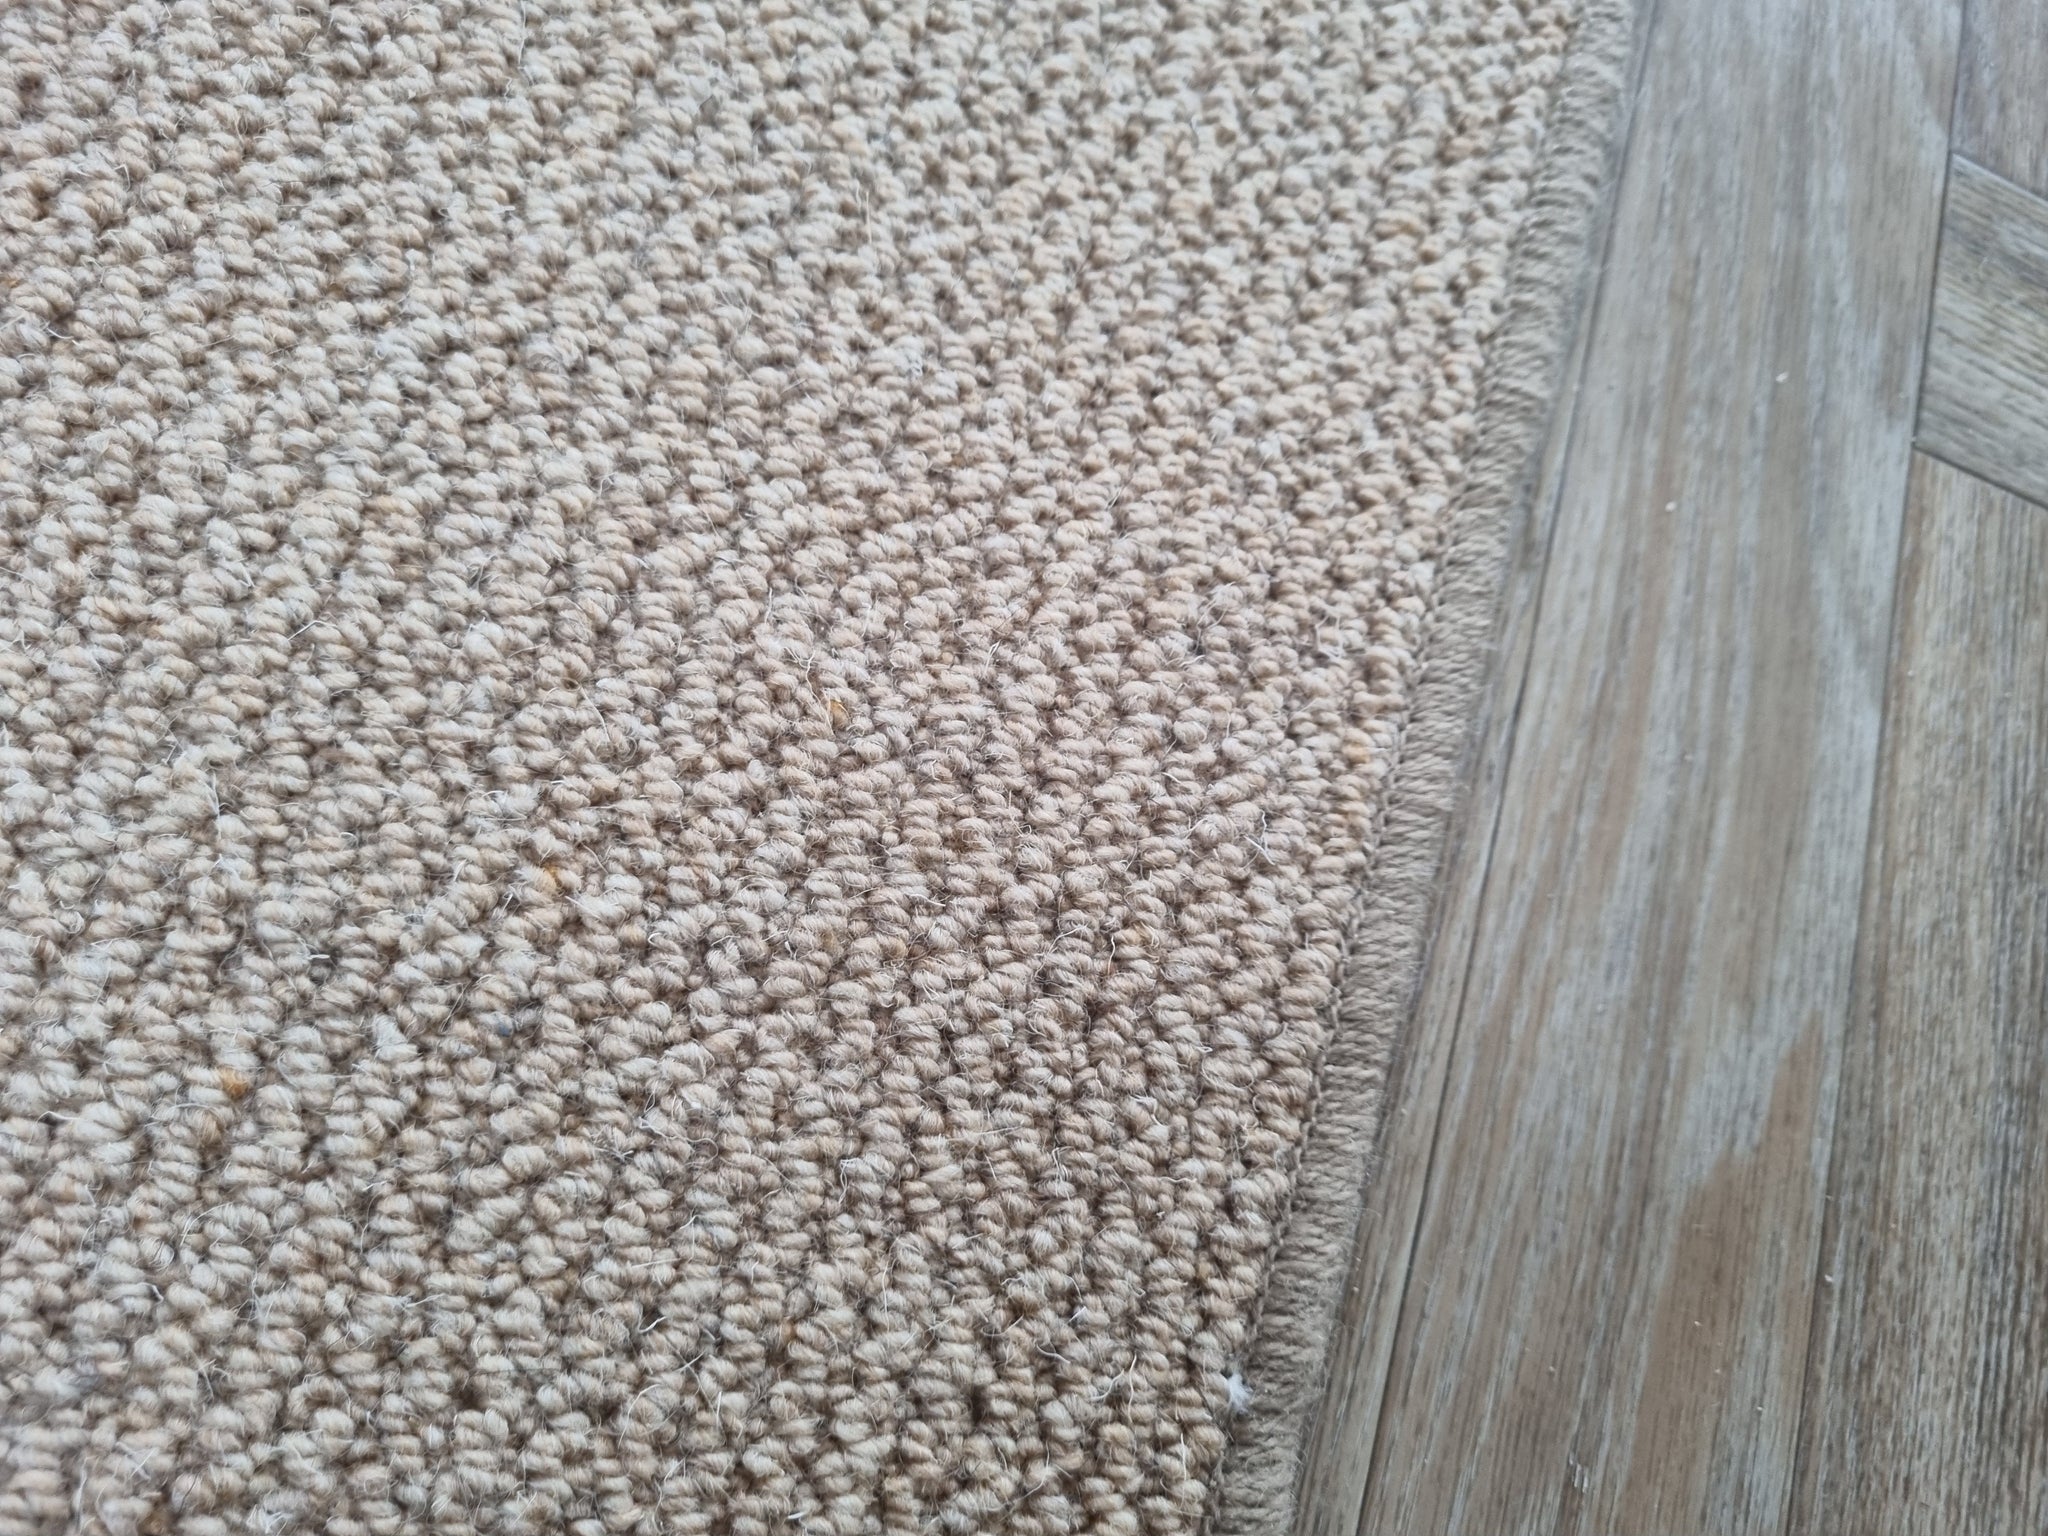 Cormar Malabar Husk wool fibre natural stair runner with whipped edge